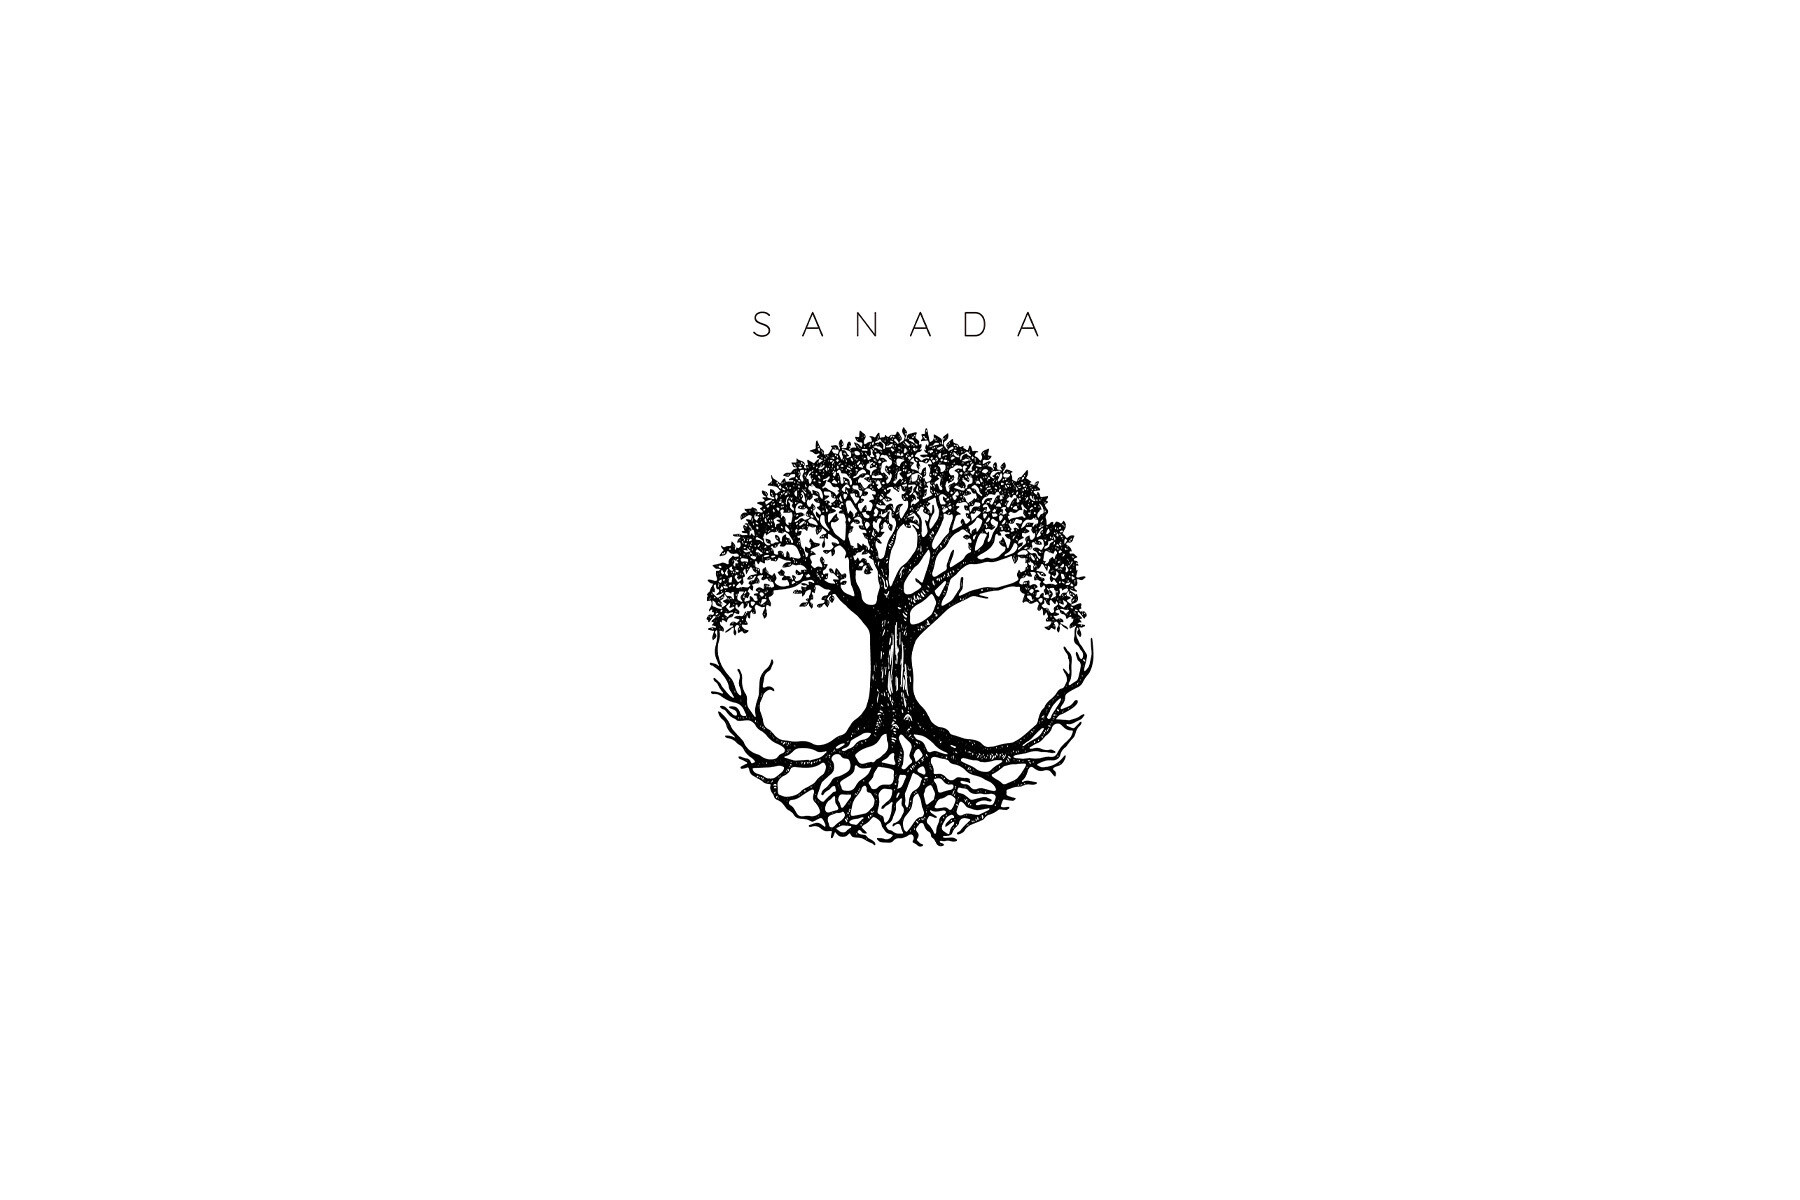 SANADA's image